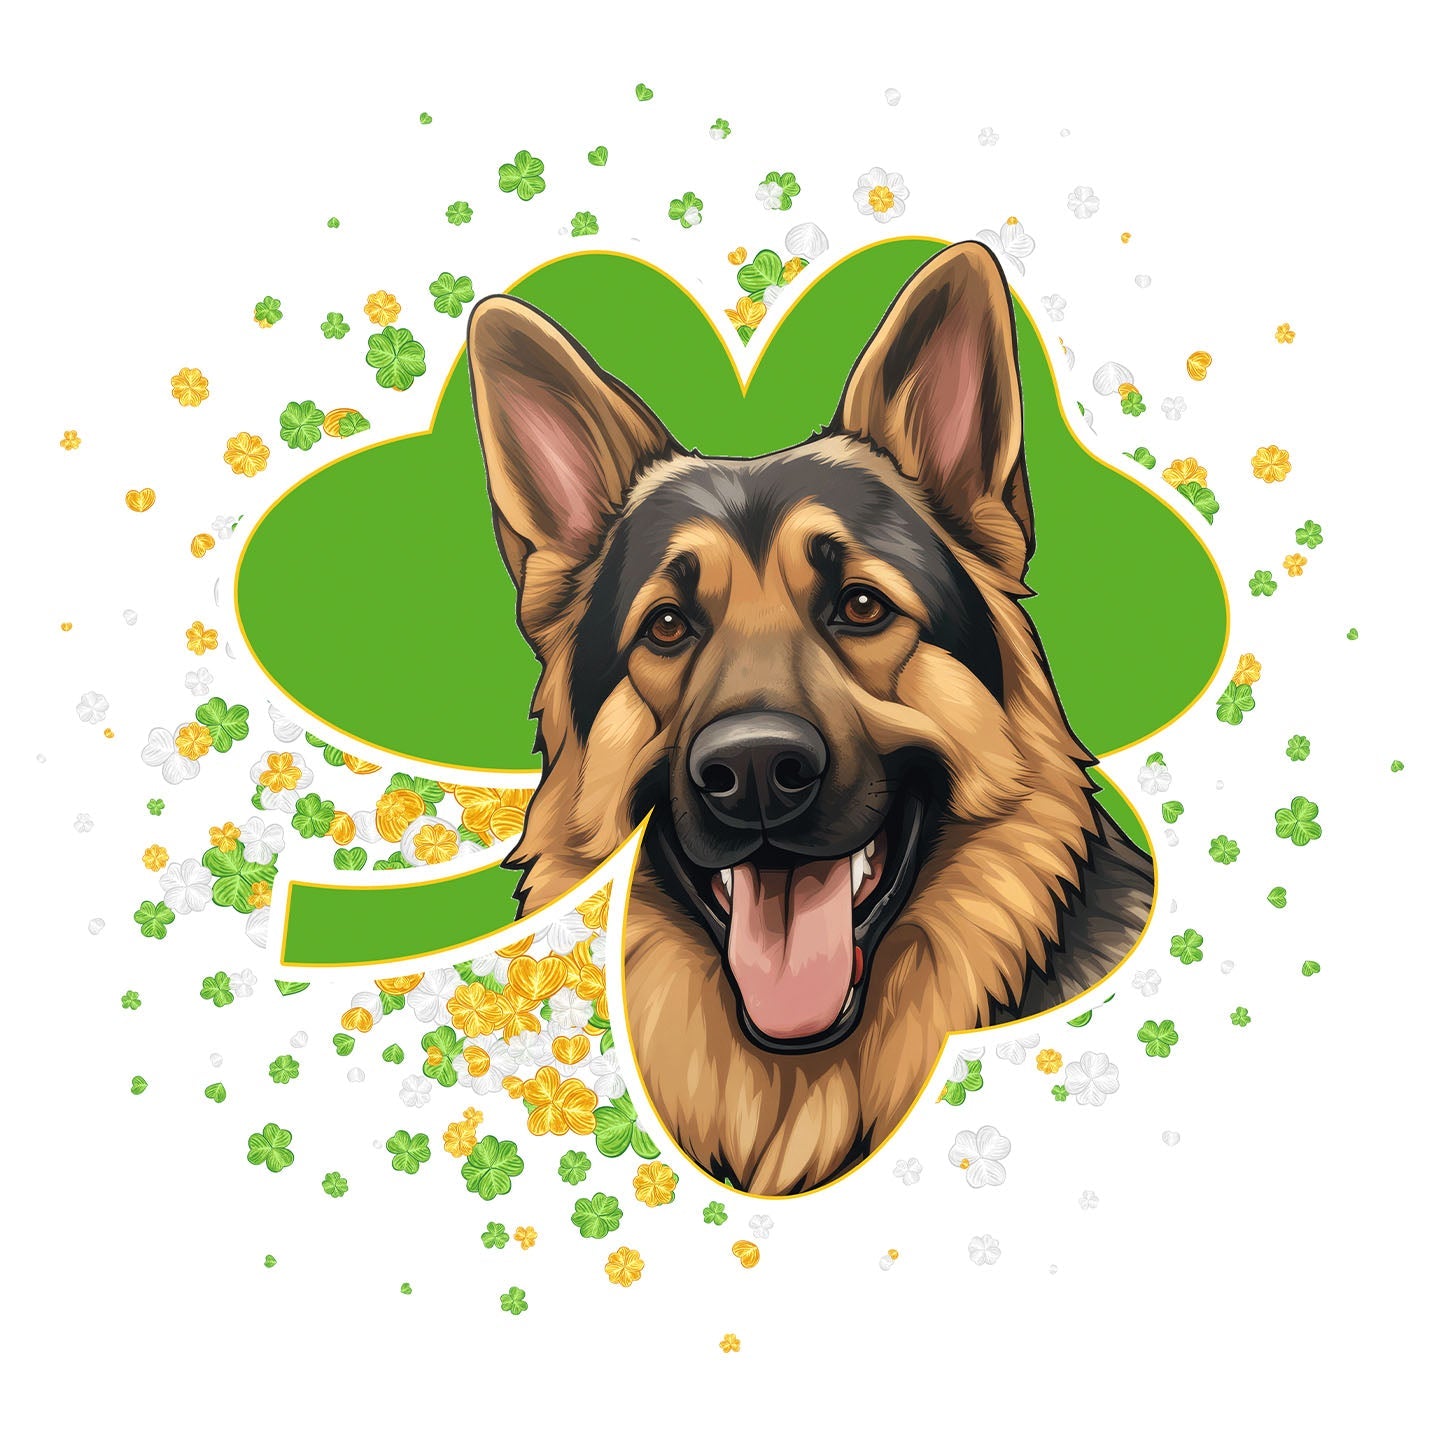 Big Clover St. Patrick's Day German Shepherd Dog - Women's Fitted T-Shirt